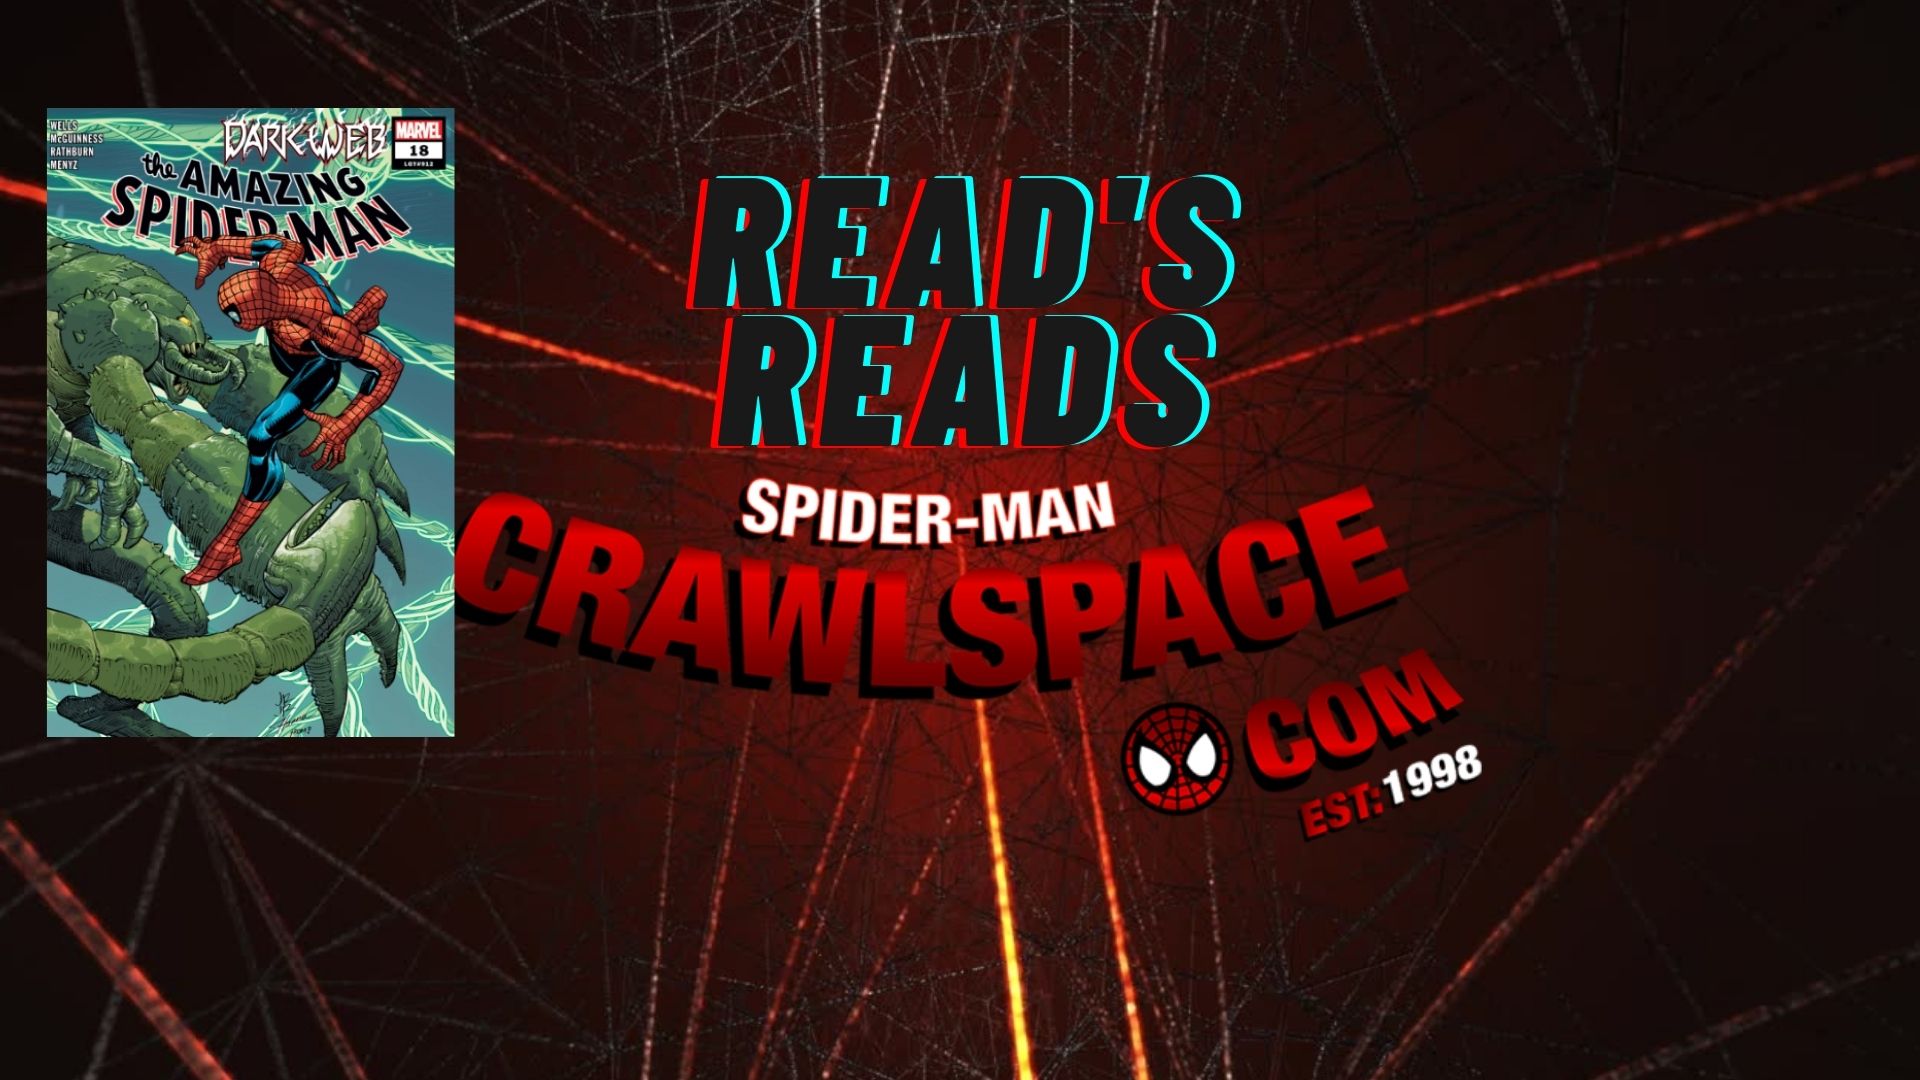 Read's Reads Amazing Spider-Man #18/912 Review - Spider Man Crawlspace